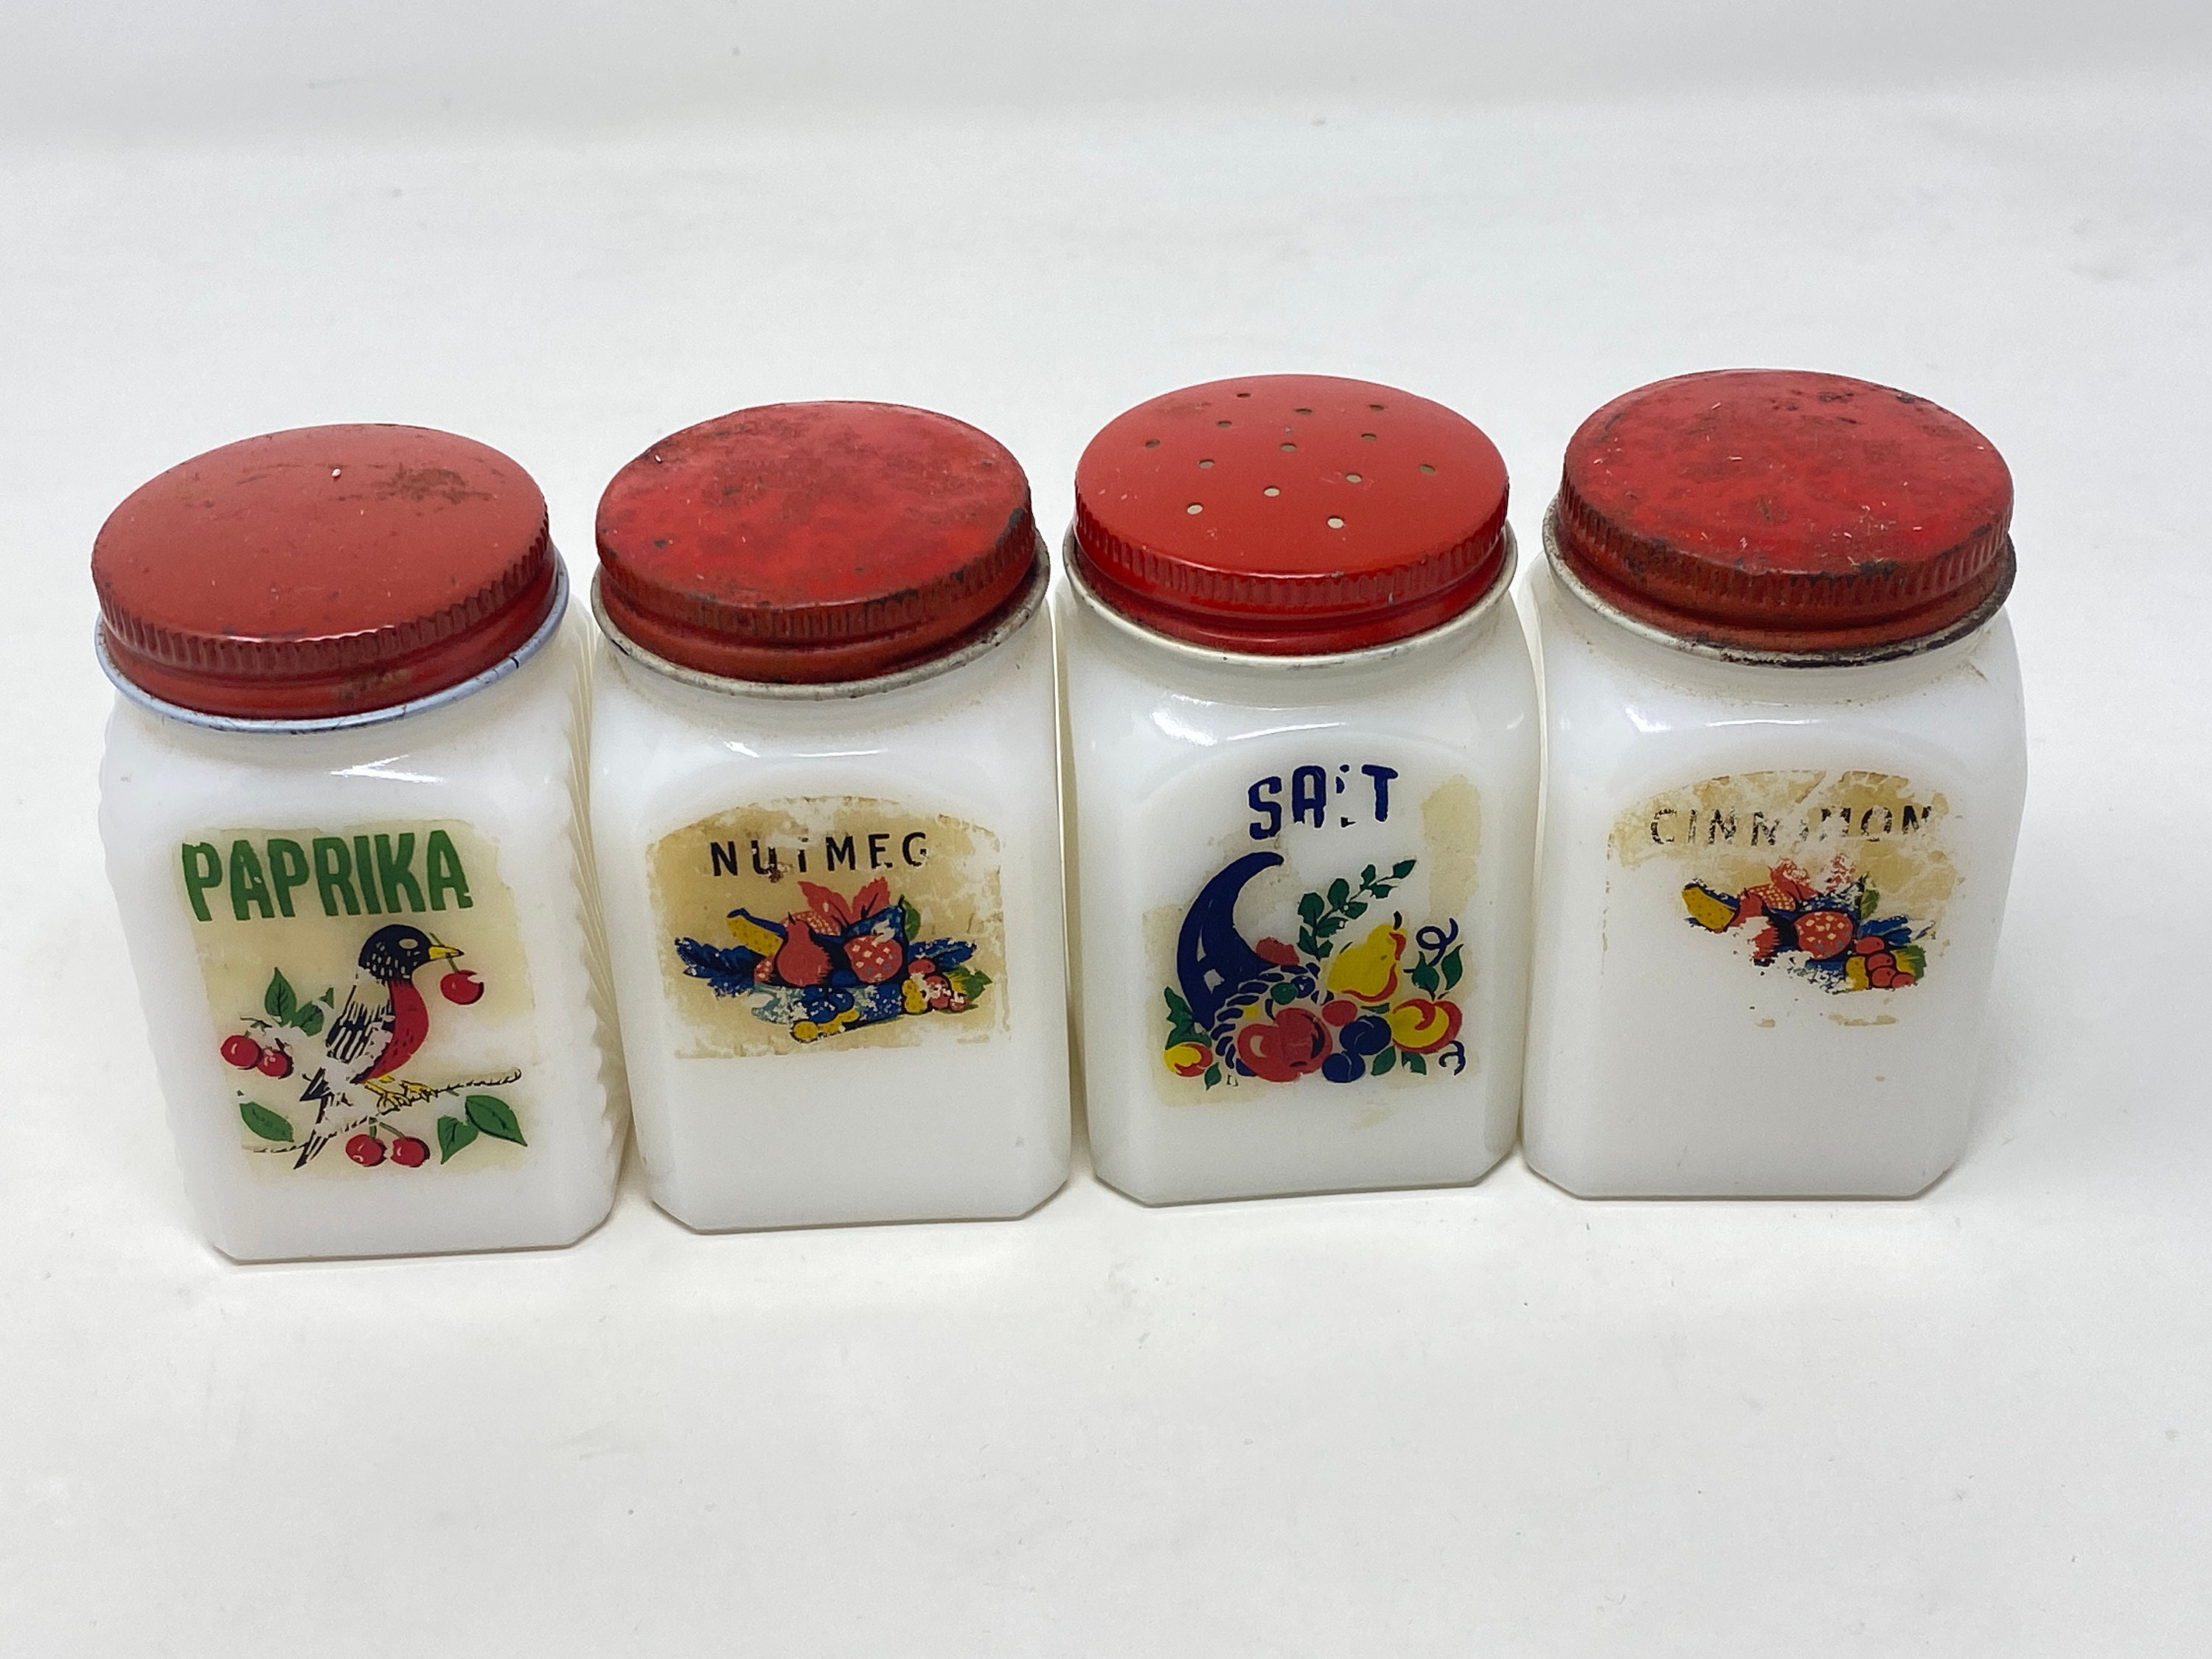 Cornucopia Brands-8oz French Square Glass Spice Jars With Shaker